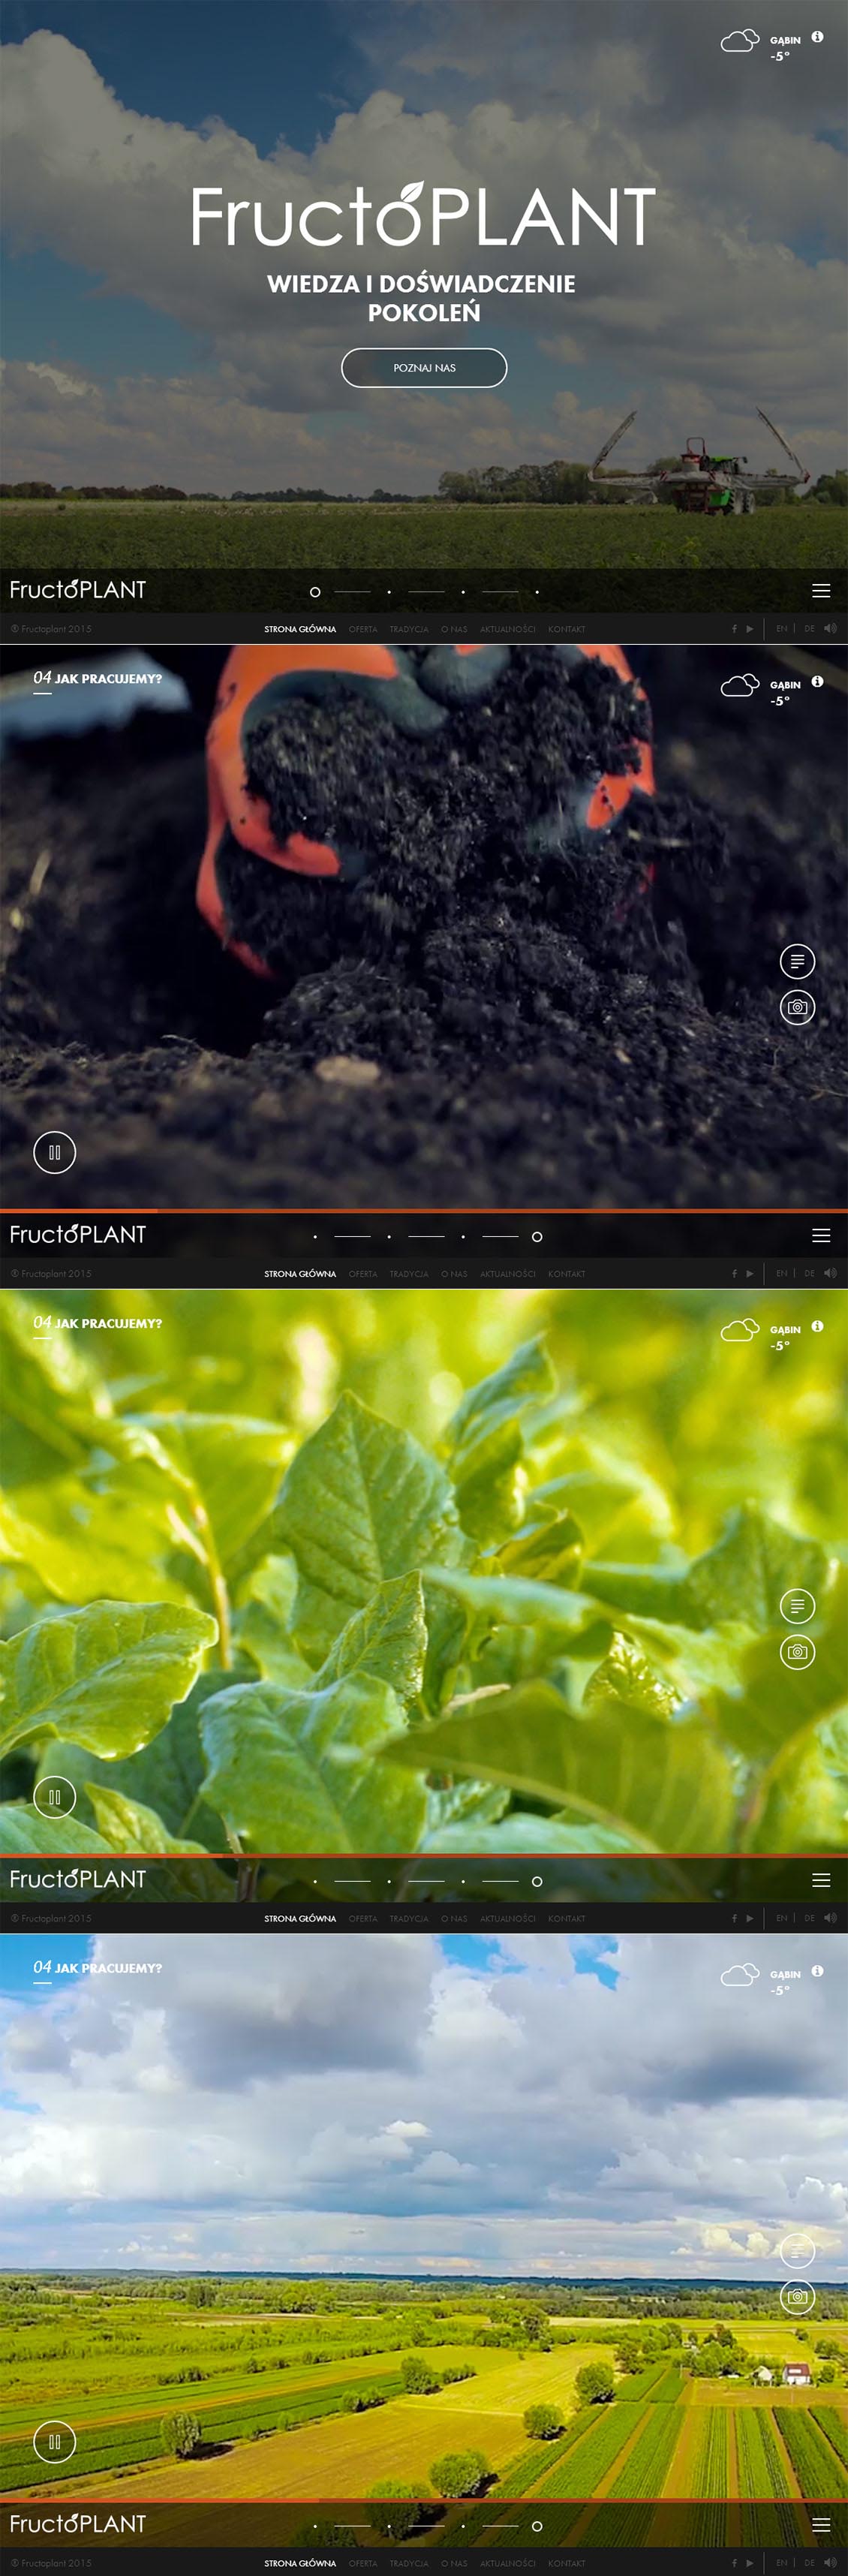 Fructoplant农业网站欣赏